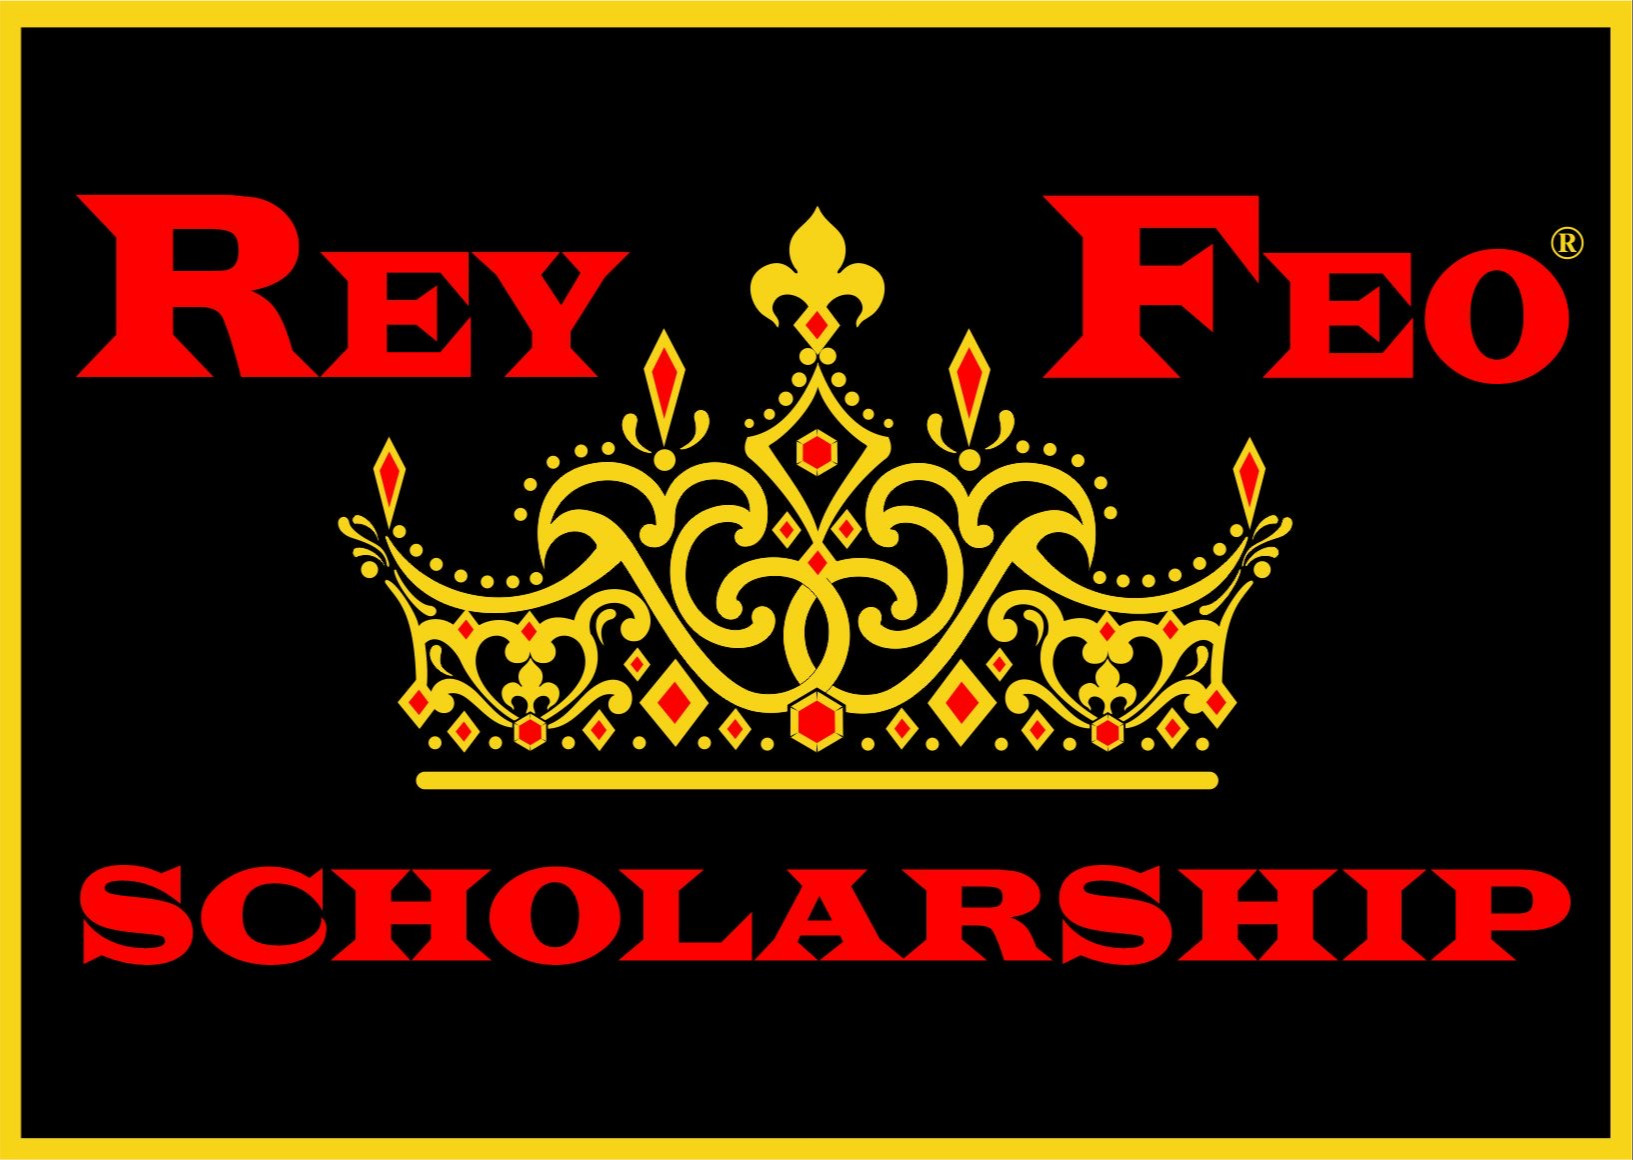 Rey Feo Scholarship Foundation logo